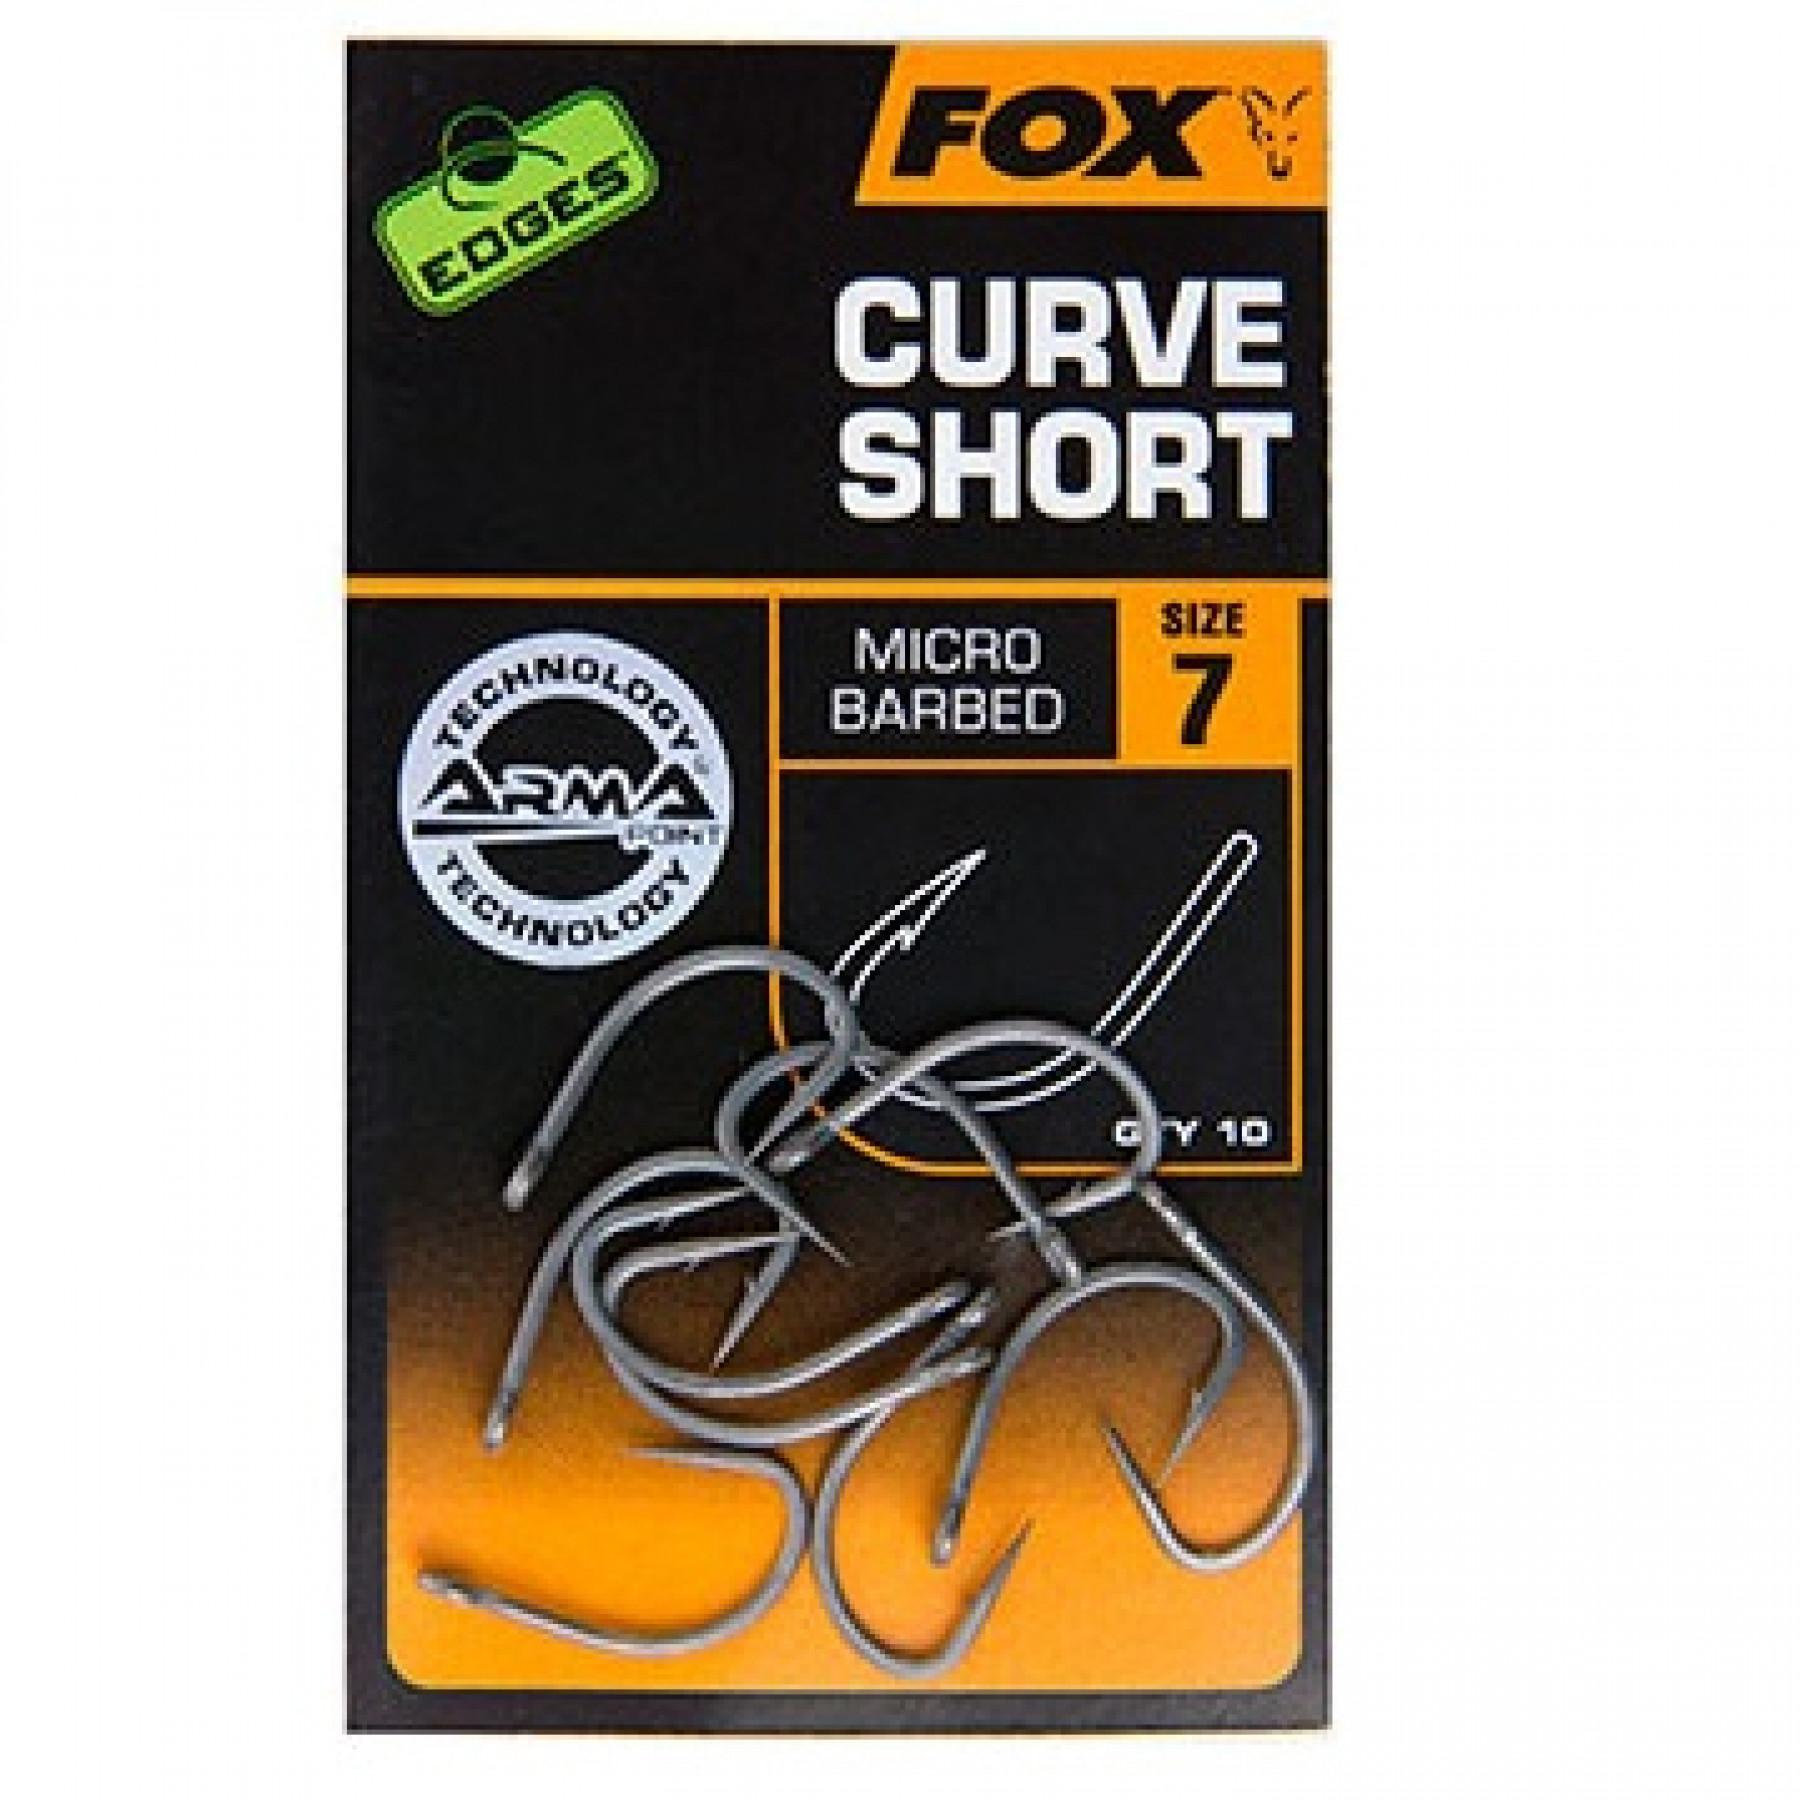 Hook Fox Curve Short Edges taille 7